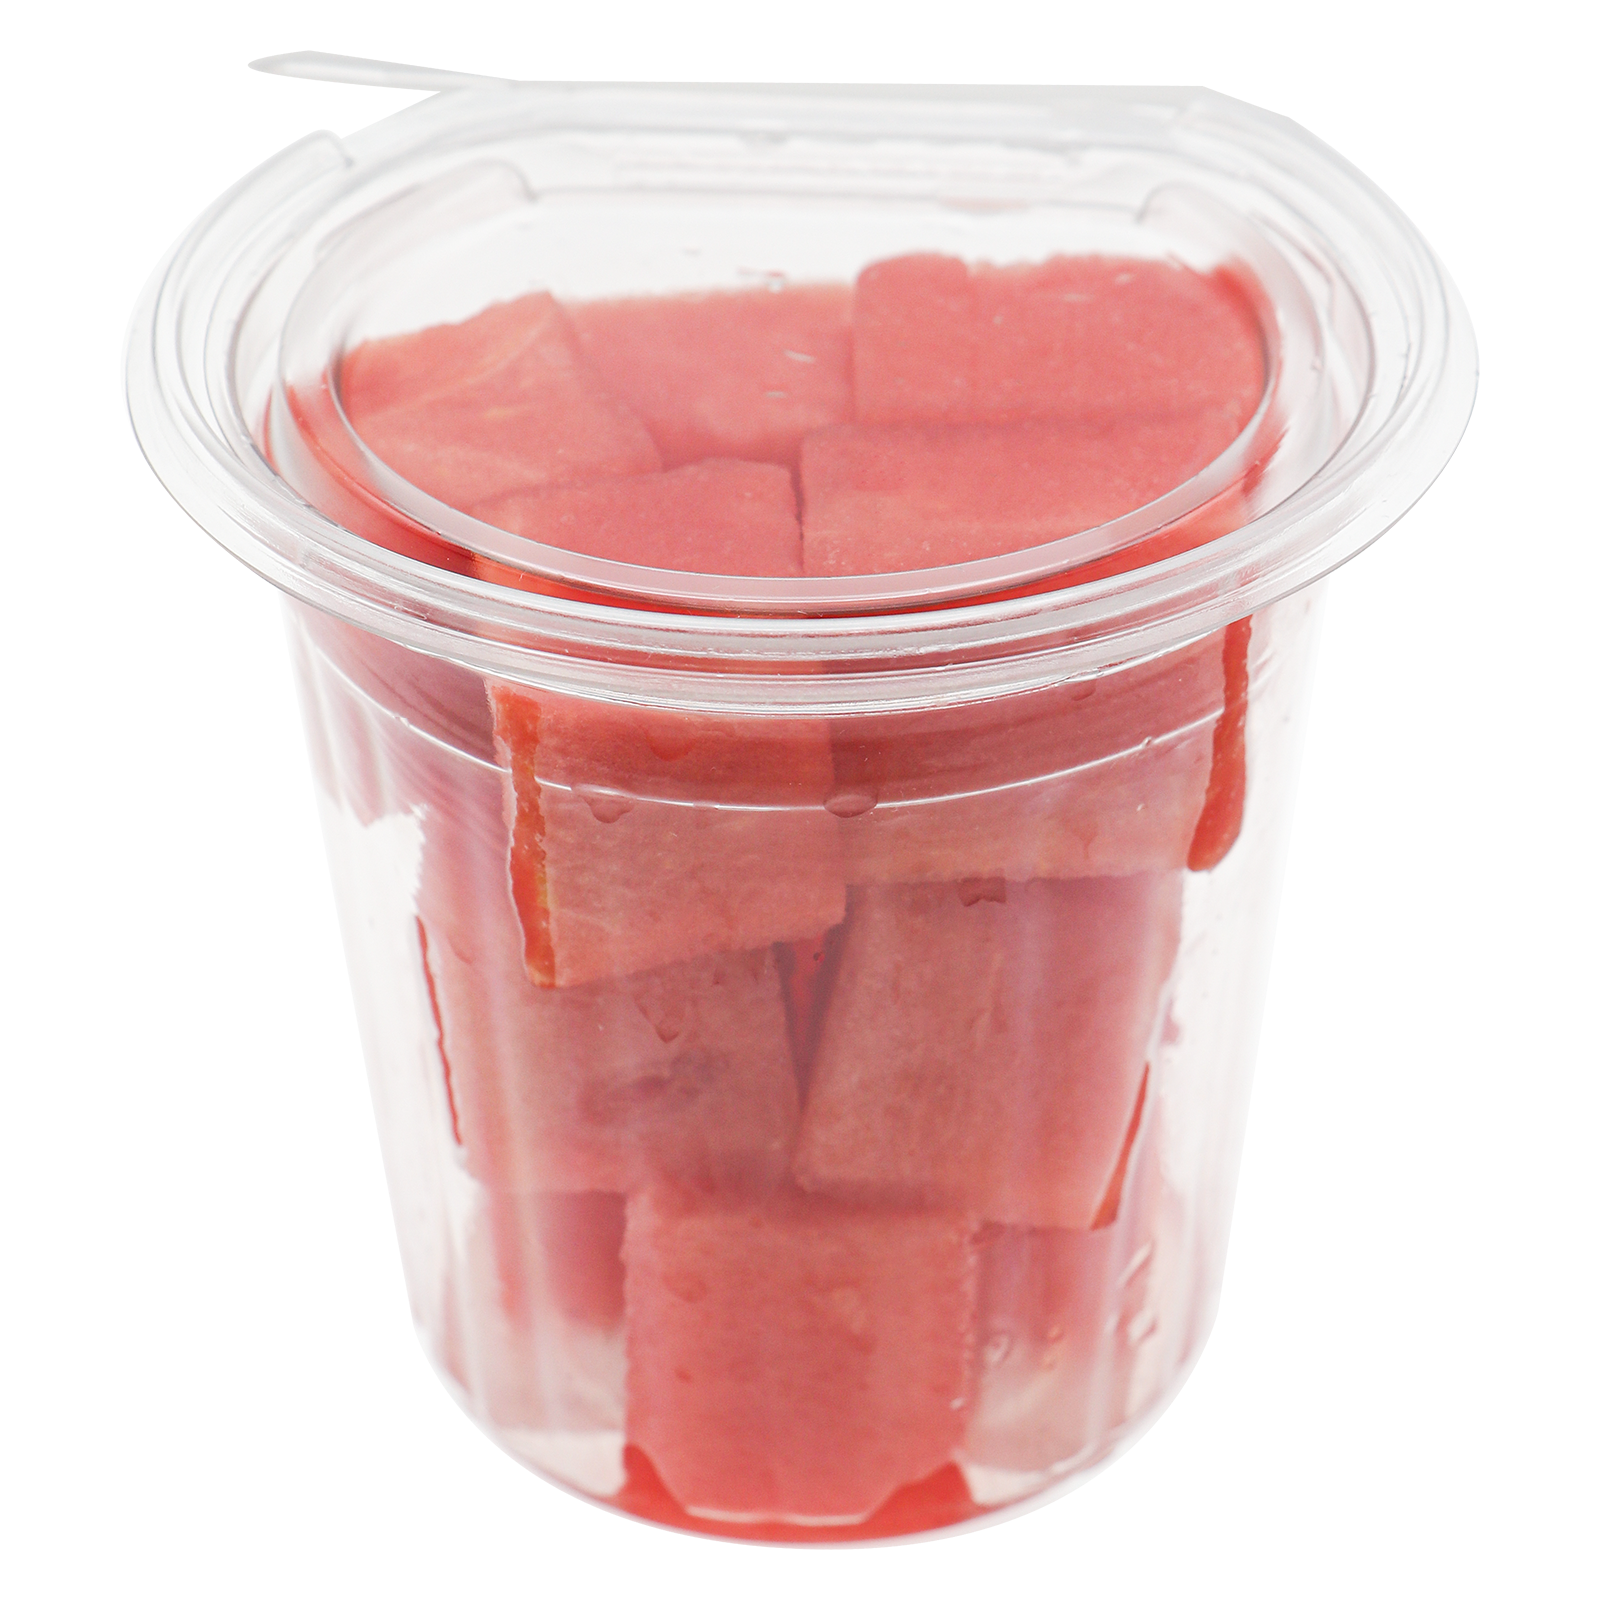 Market Cuts Watermelon Chunk Grab-n-Go - 6.6oz Cup